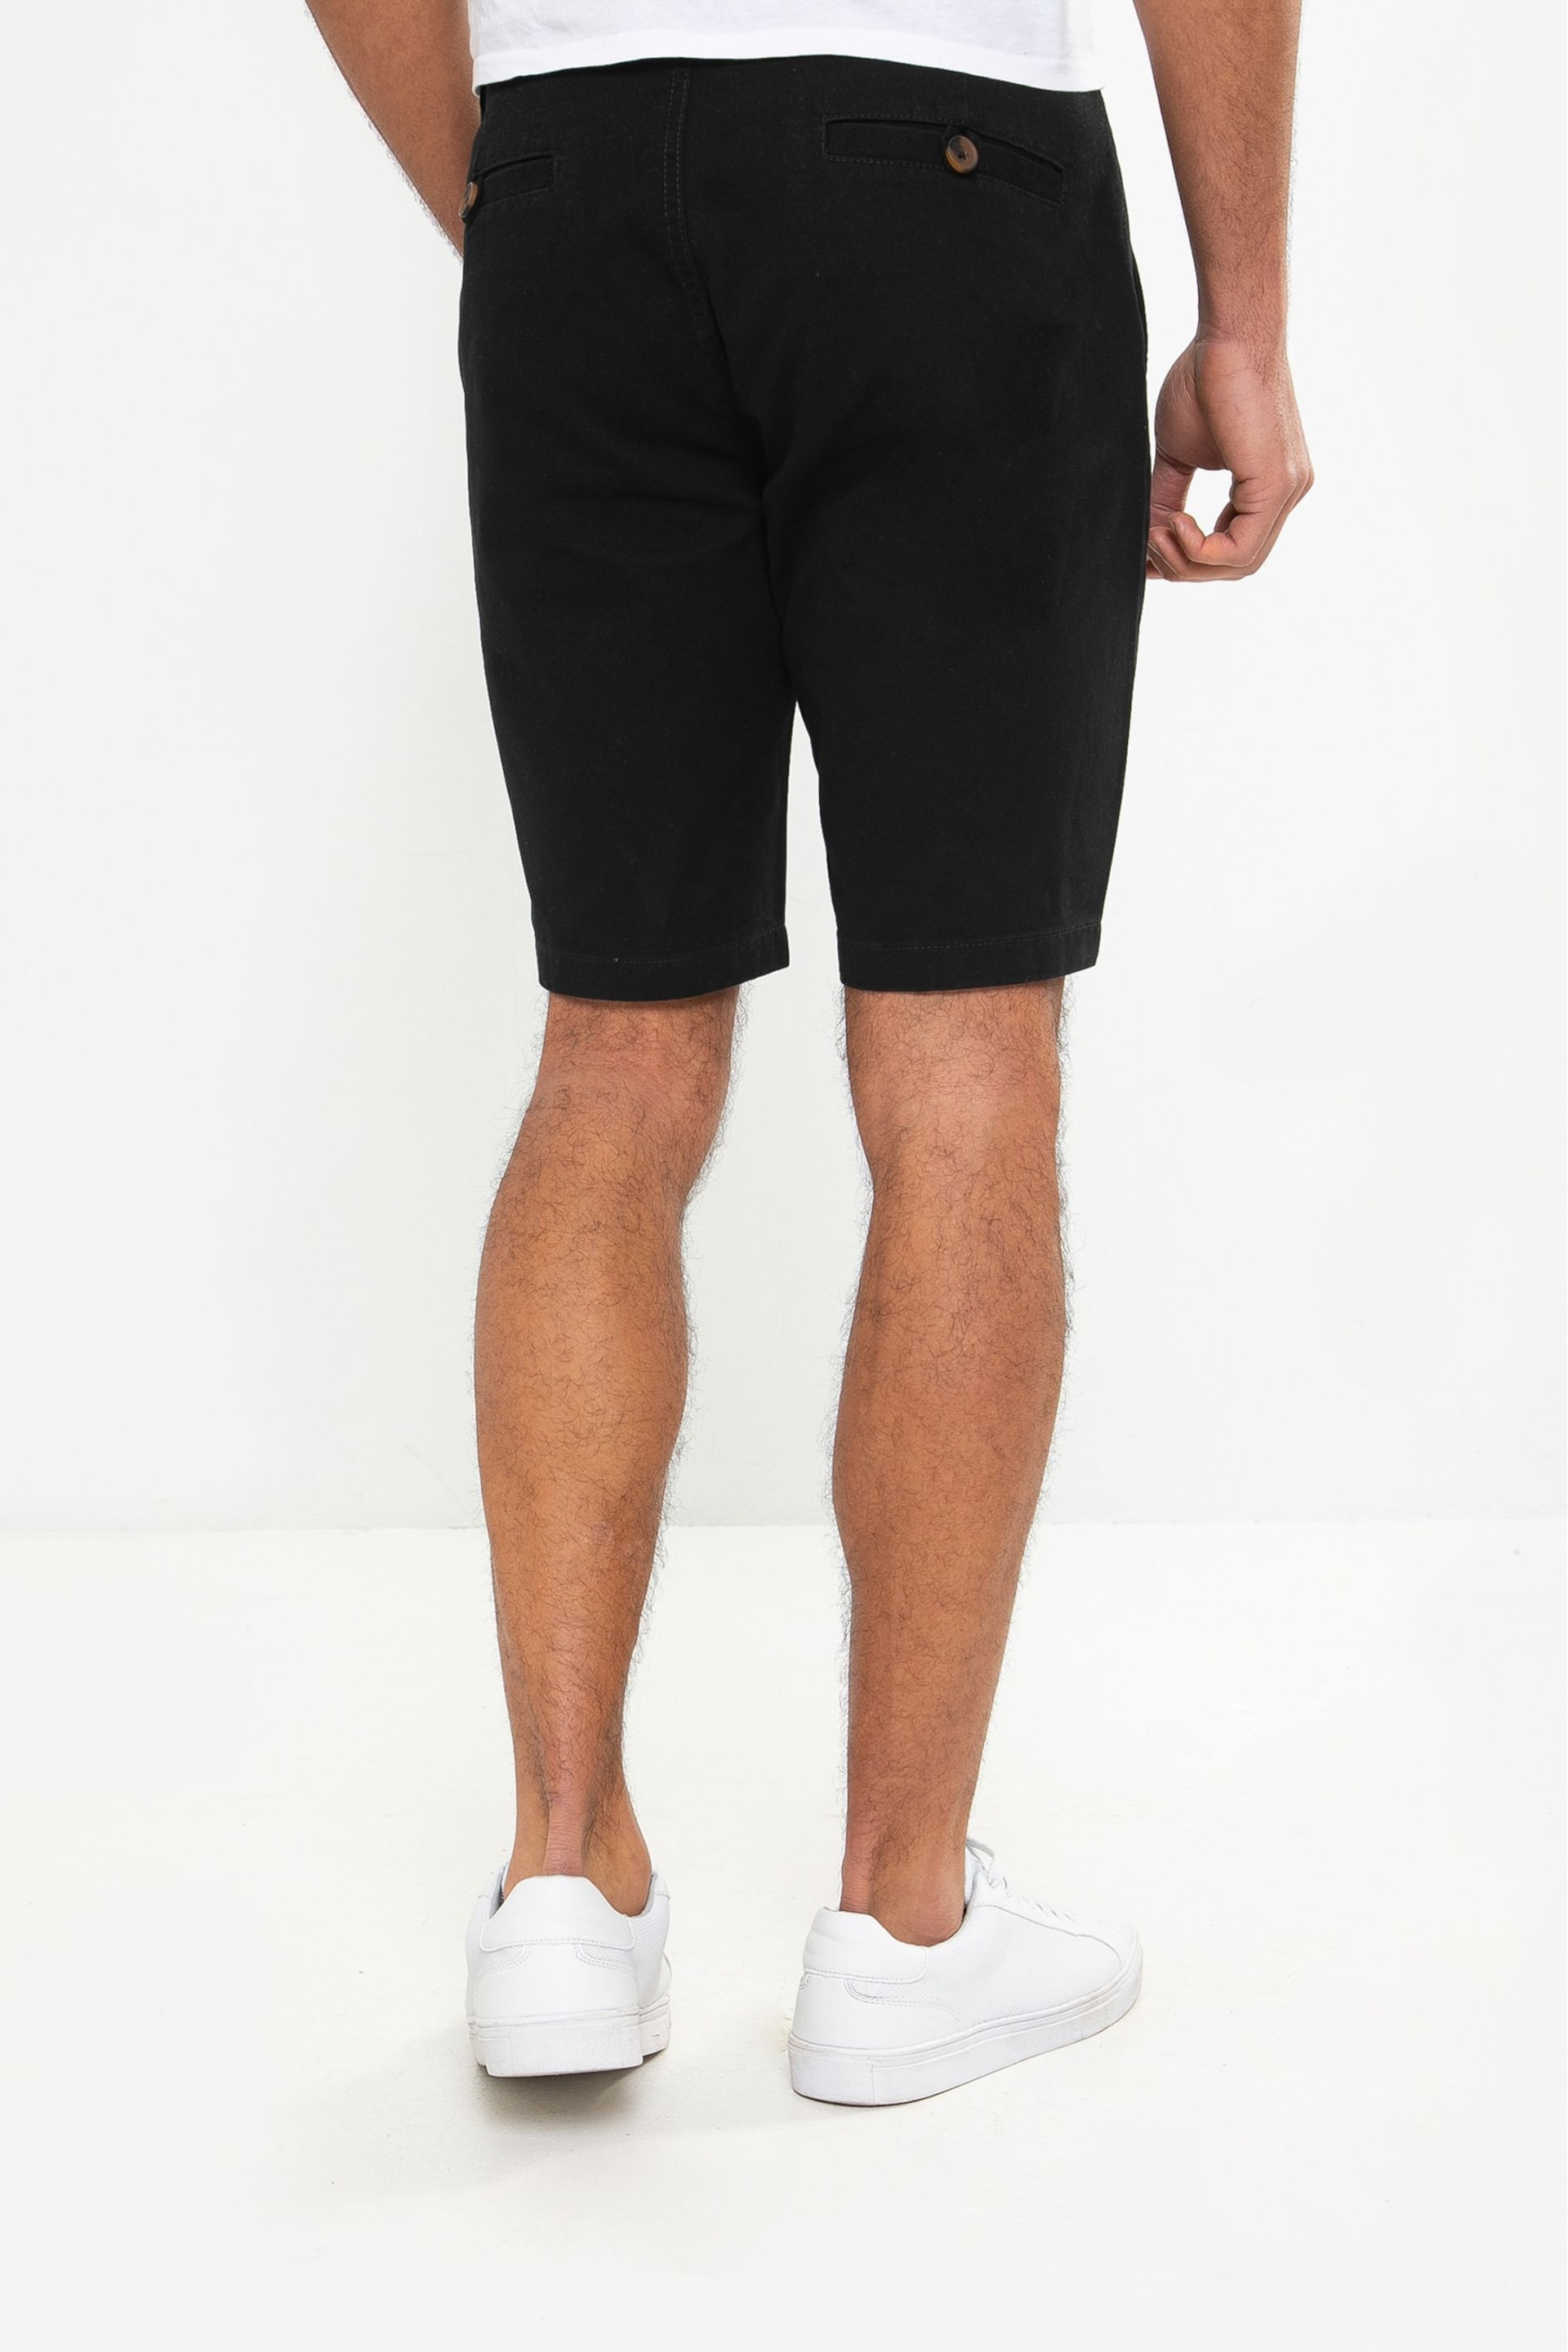 Threadbare Black Regular Fit Cotton Chinos Shorts - Image 2 of 4